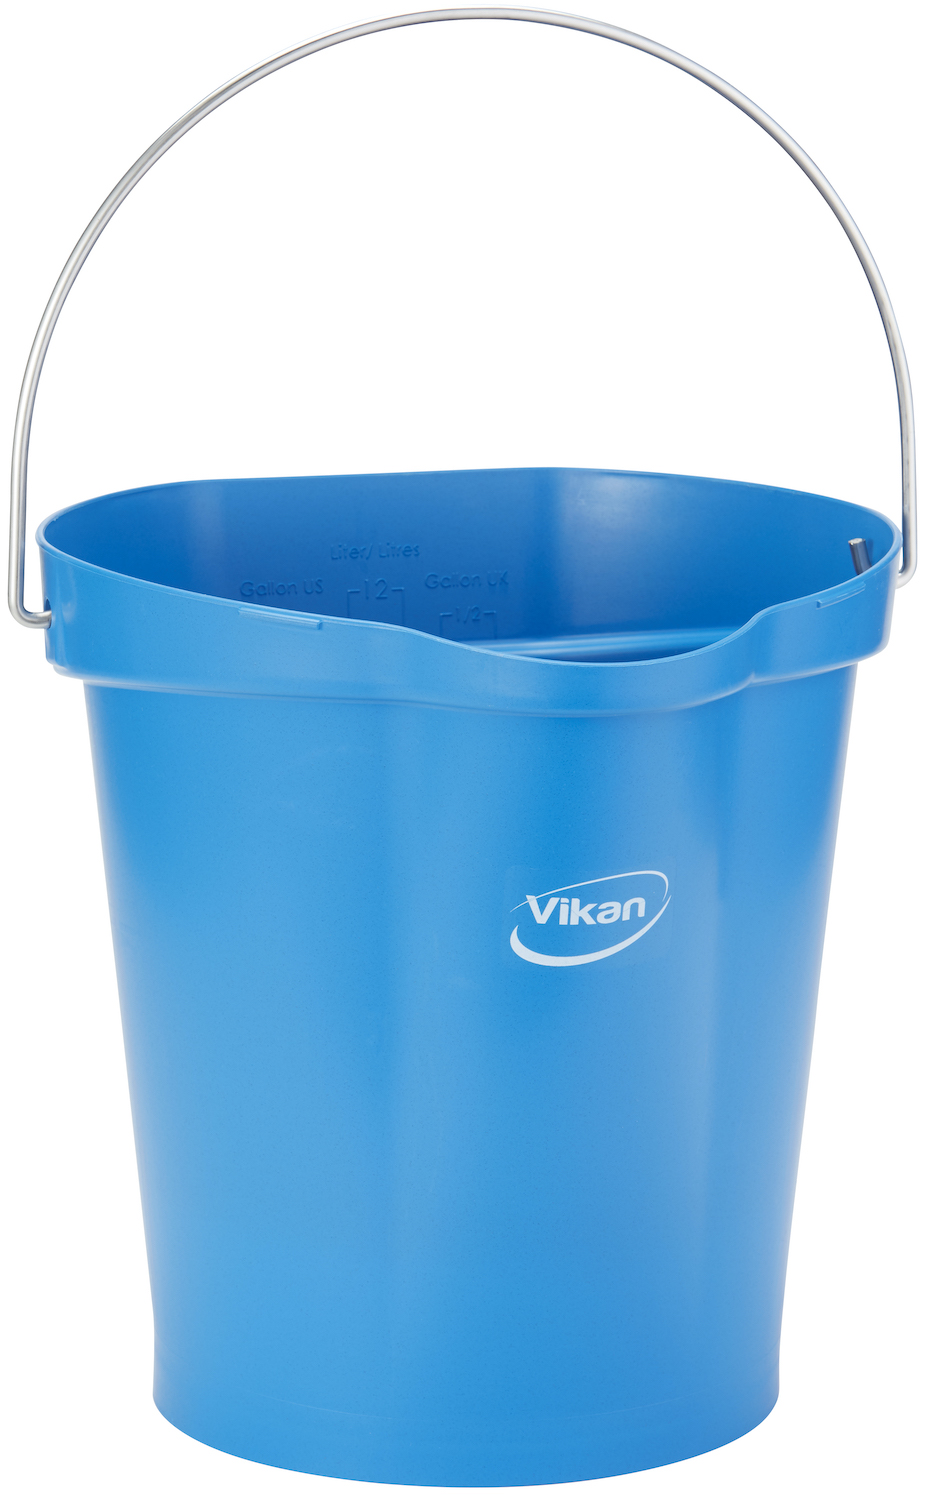 Vikan Bucket, Metal Detectable, 12 Litre, Blue